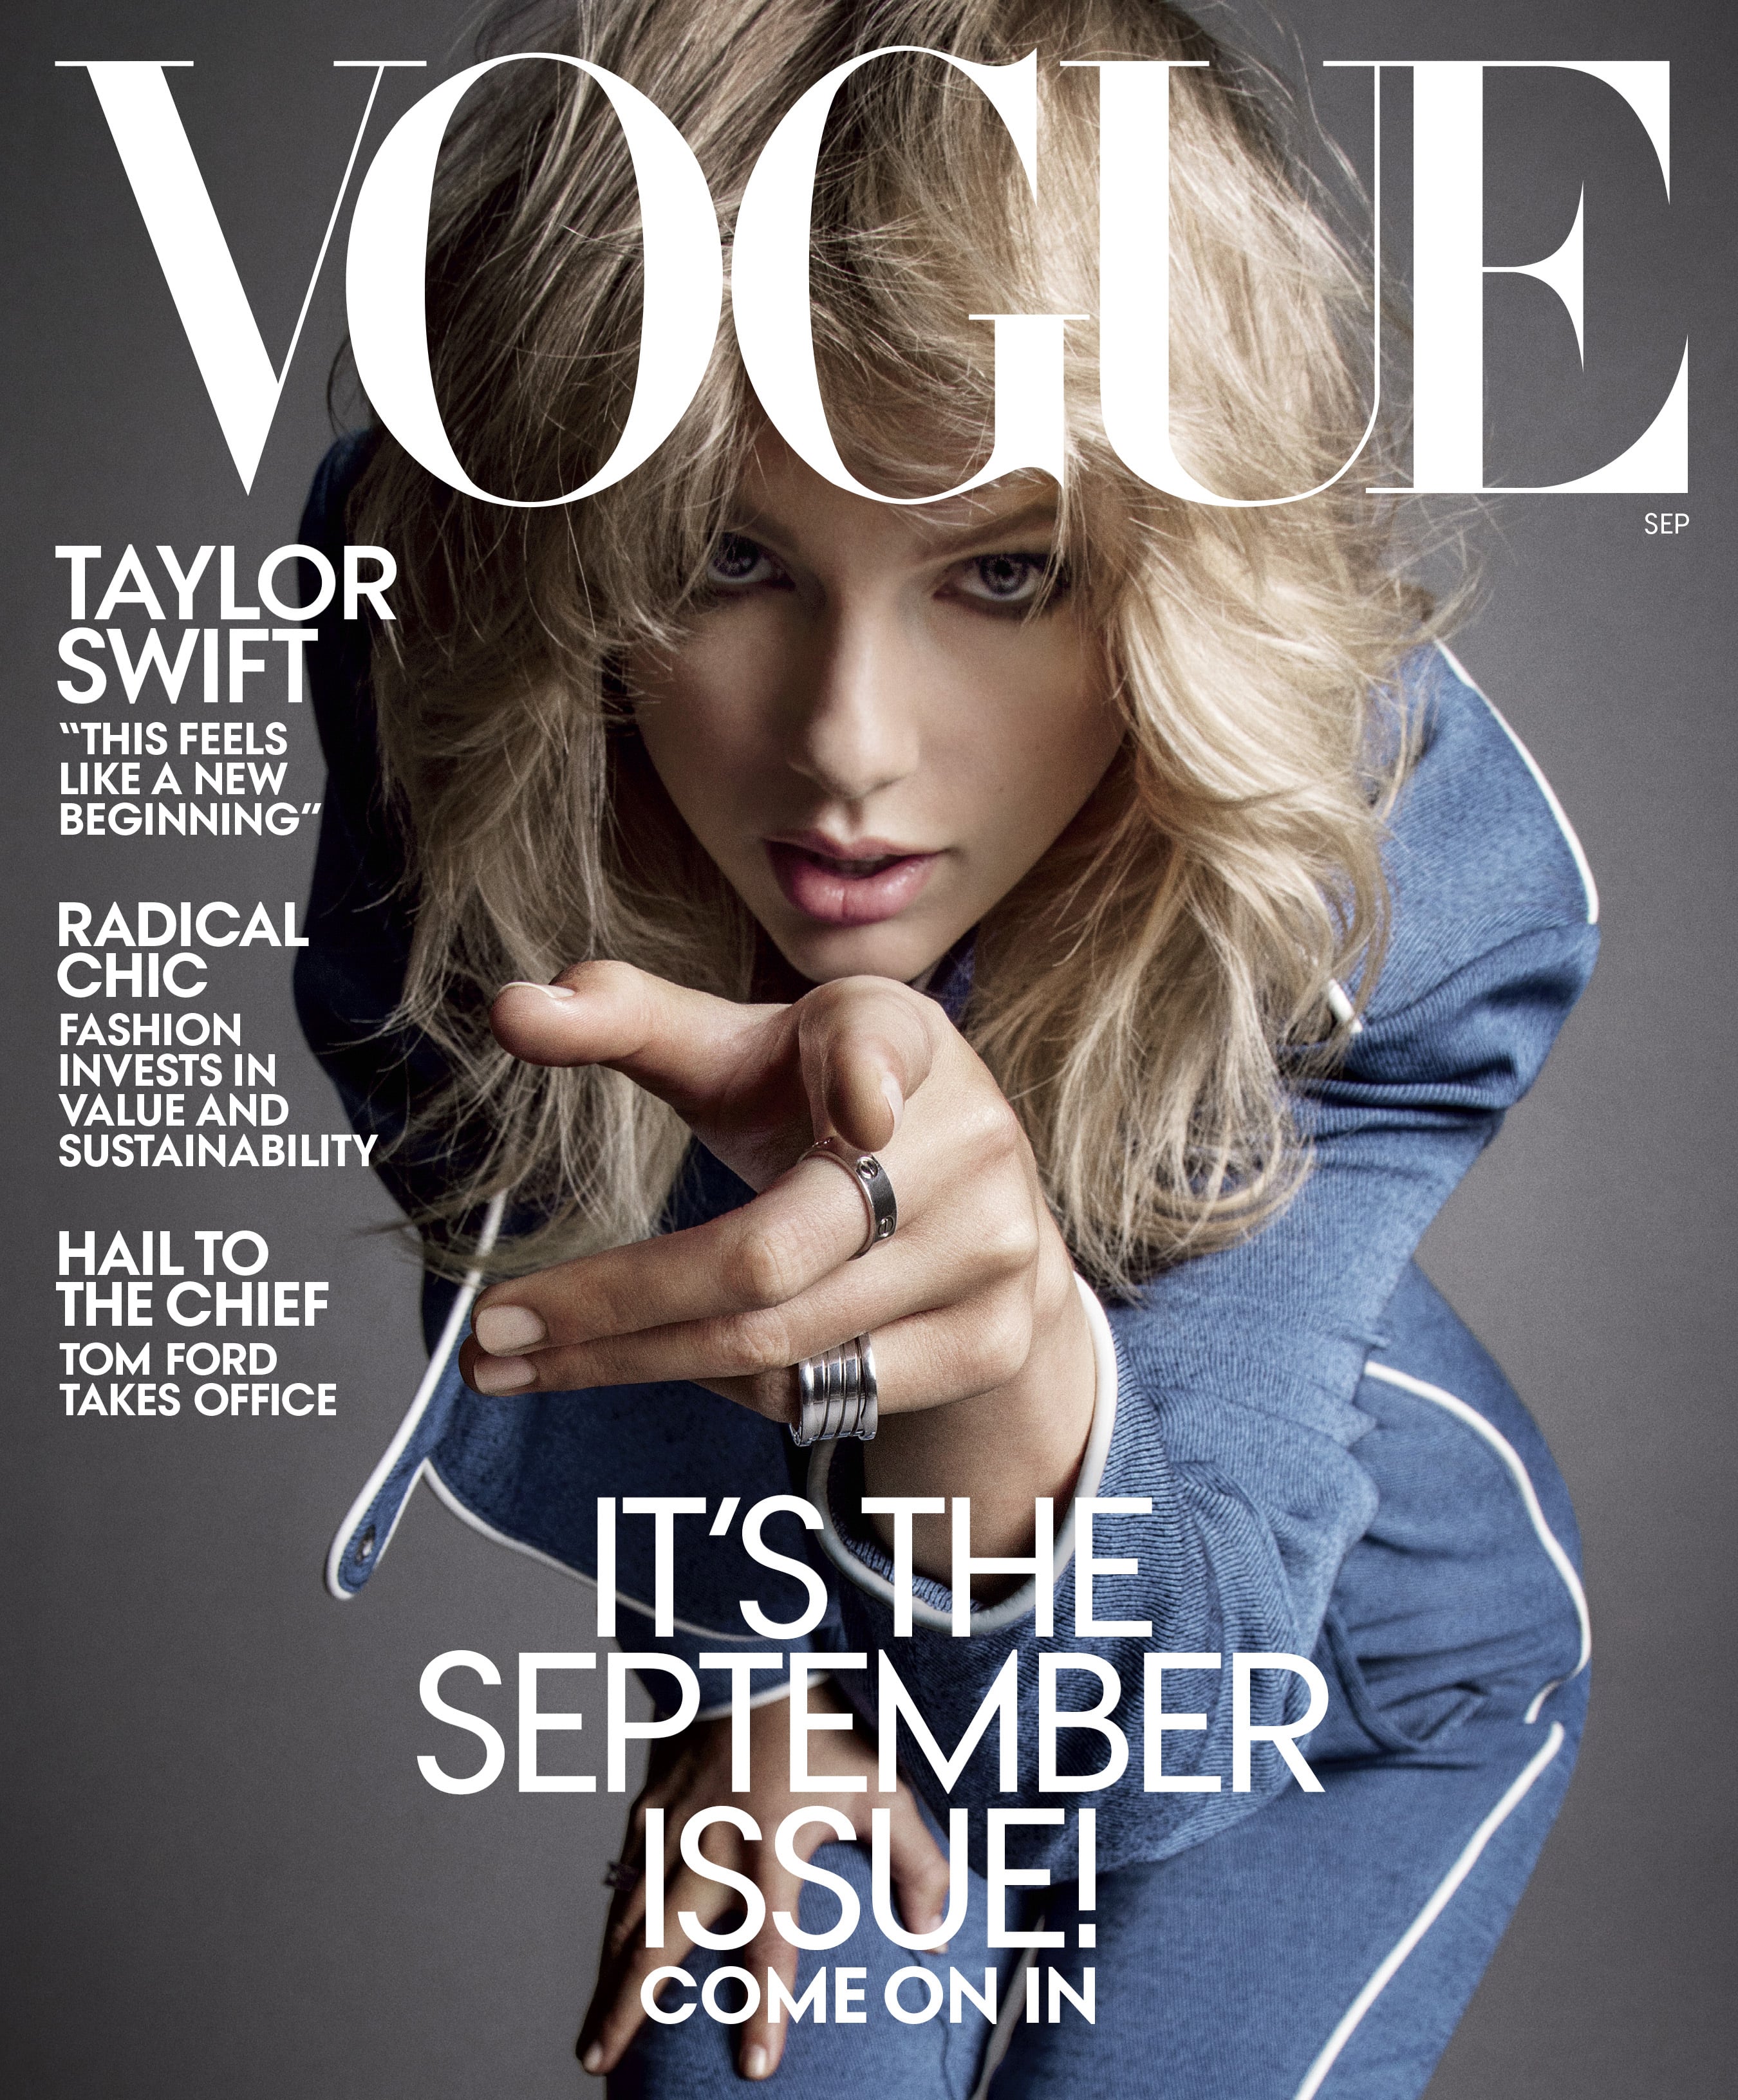 Taylor Swift Reputation Album Reviews, British Vogue